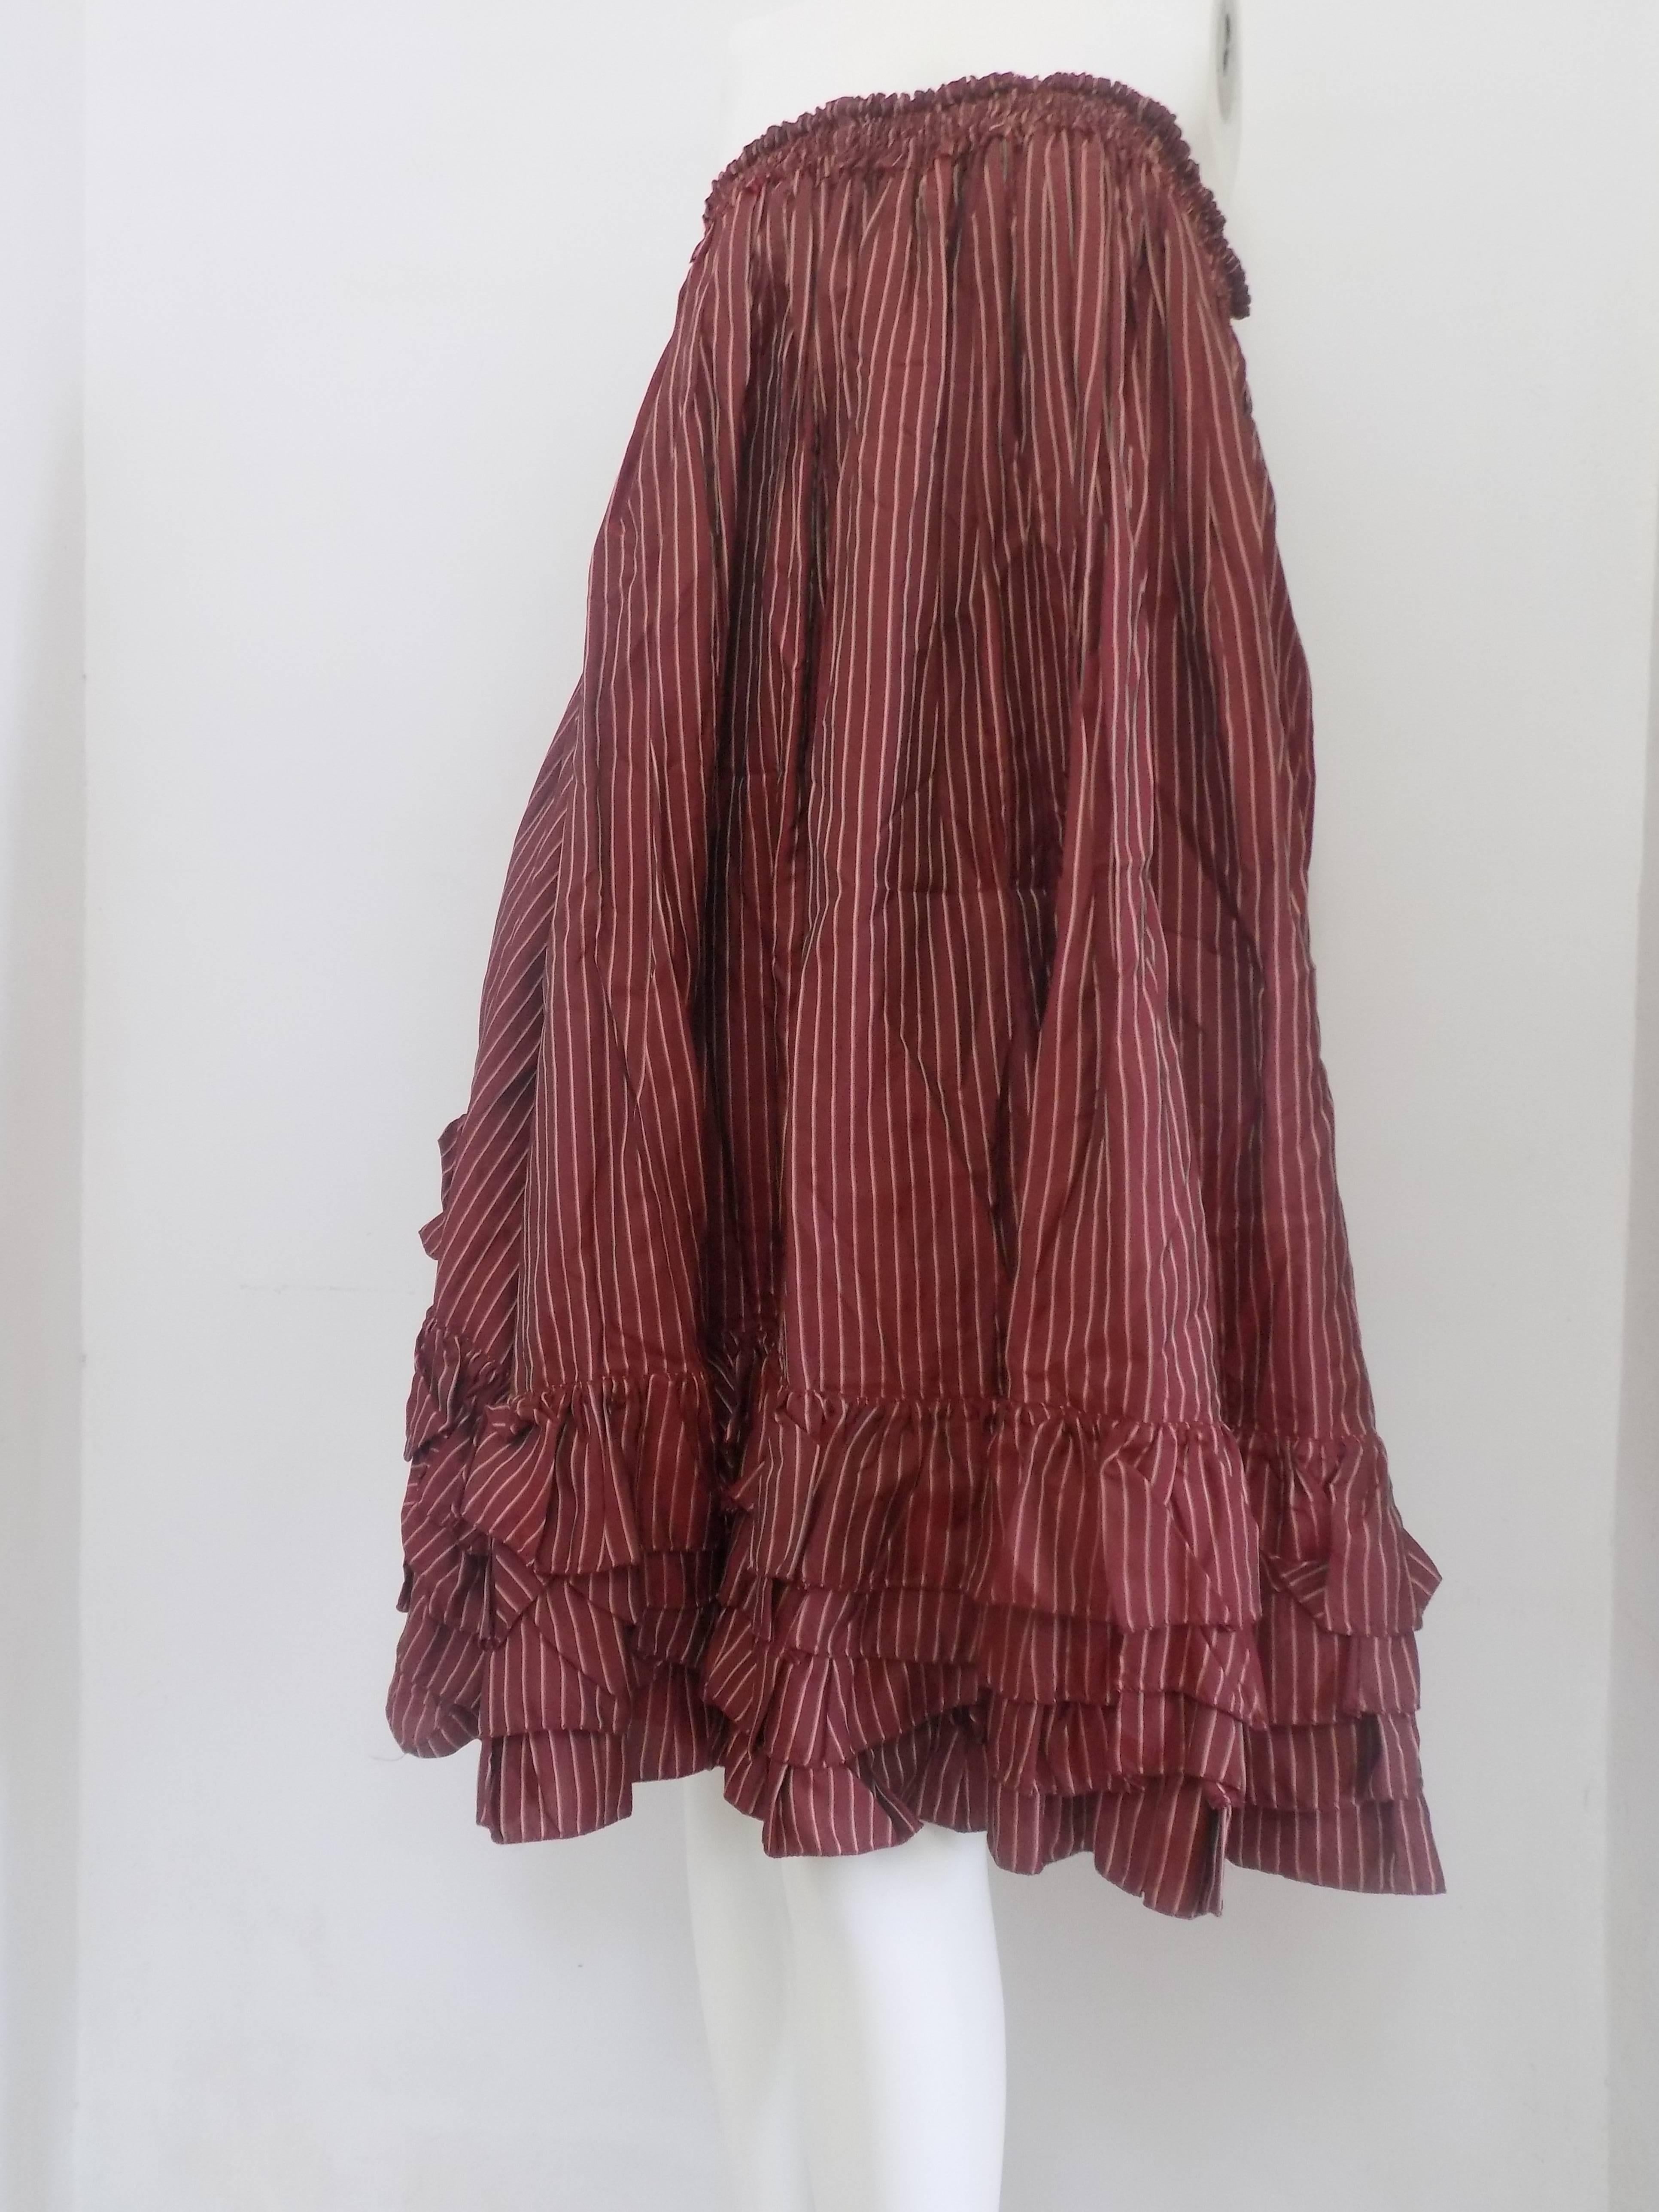 1970s Jean Paul Gaultier Bordeaux long skirt

Totally made in italy

italian size range 44

high waist

100% rayon

